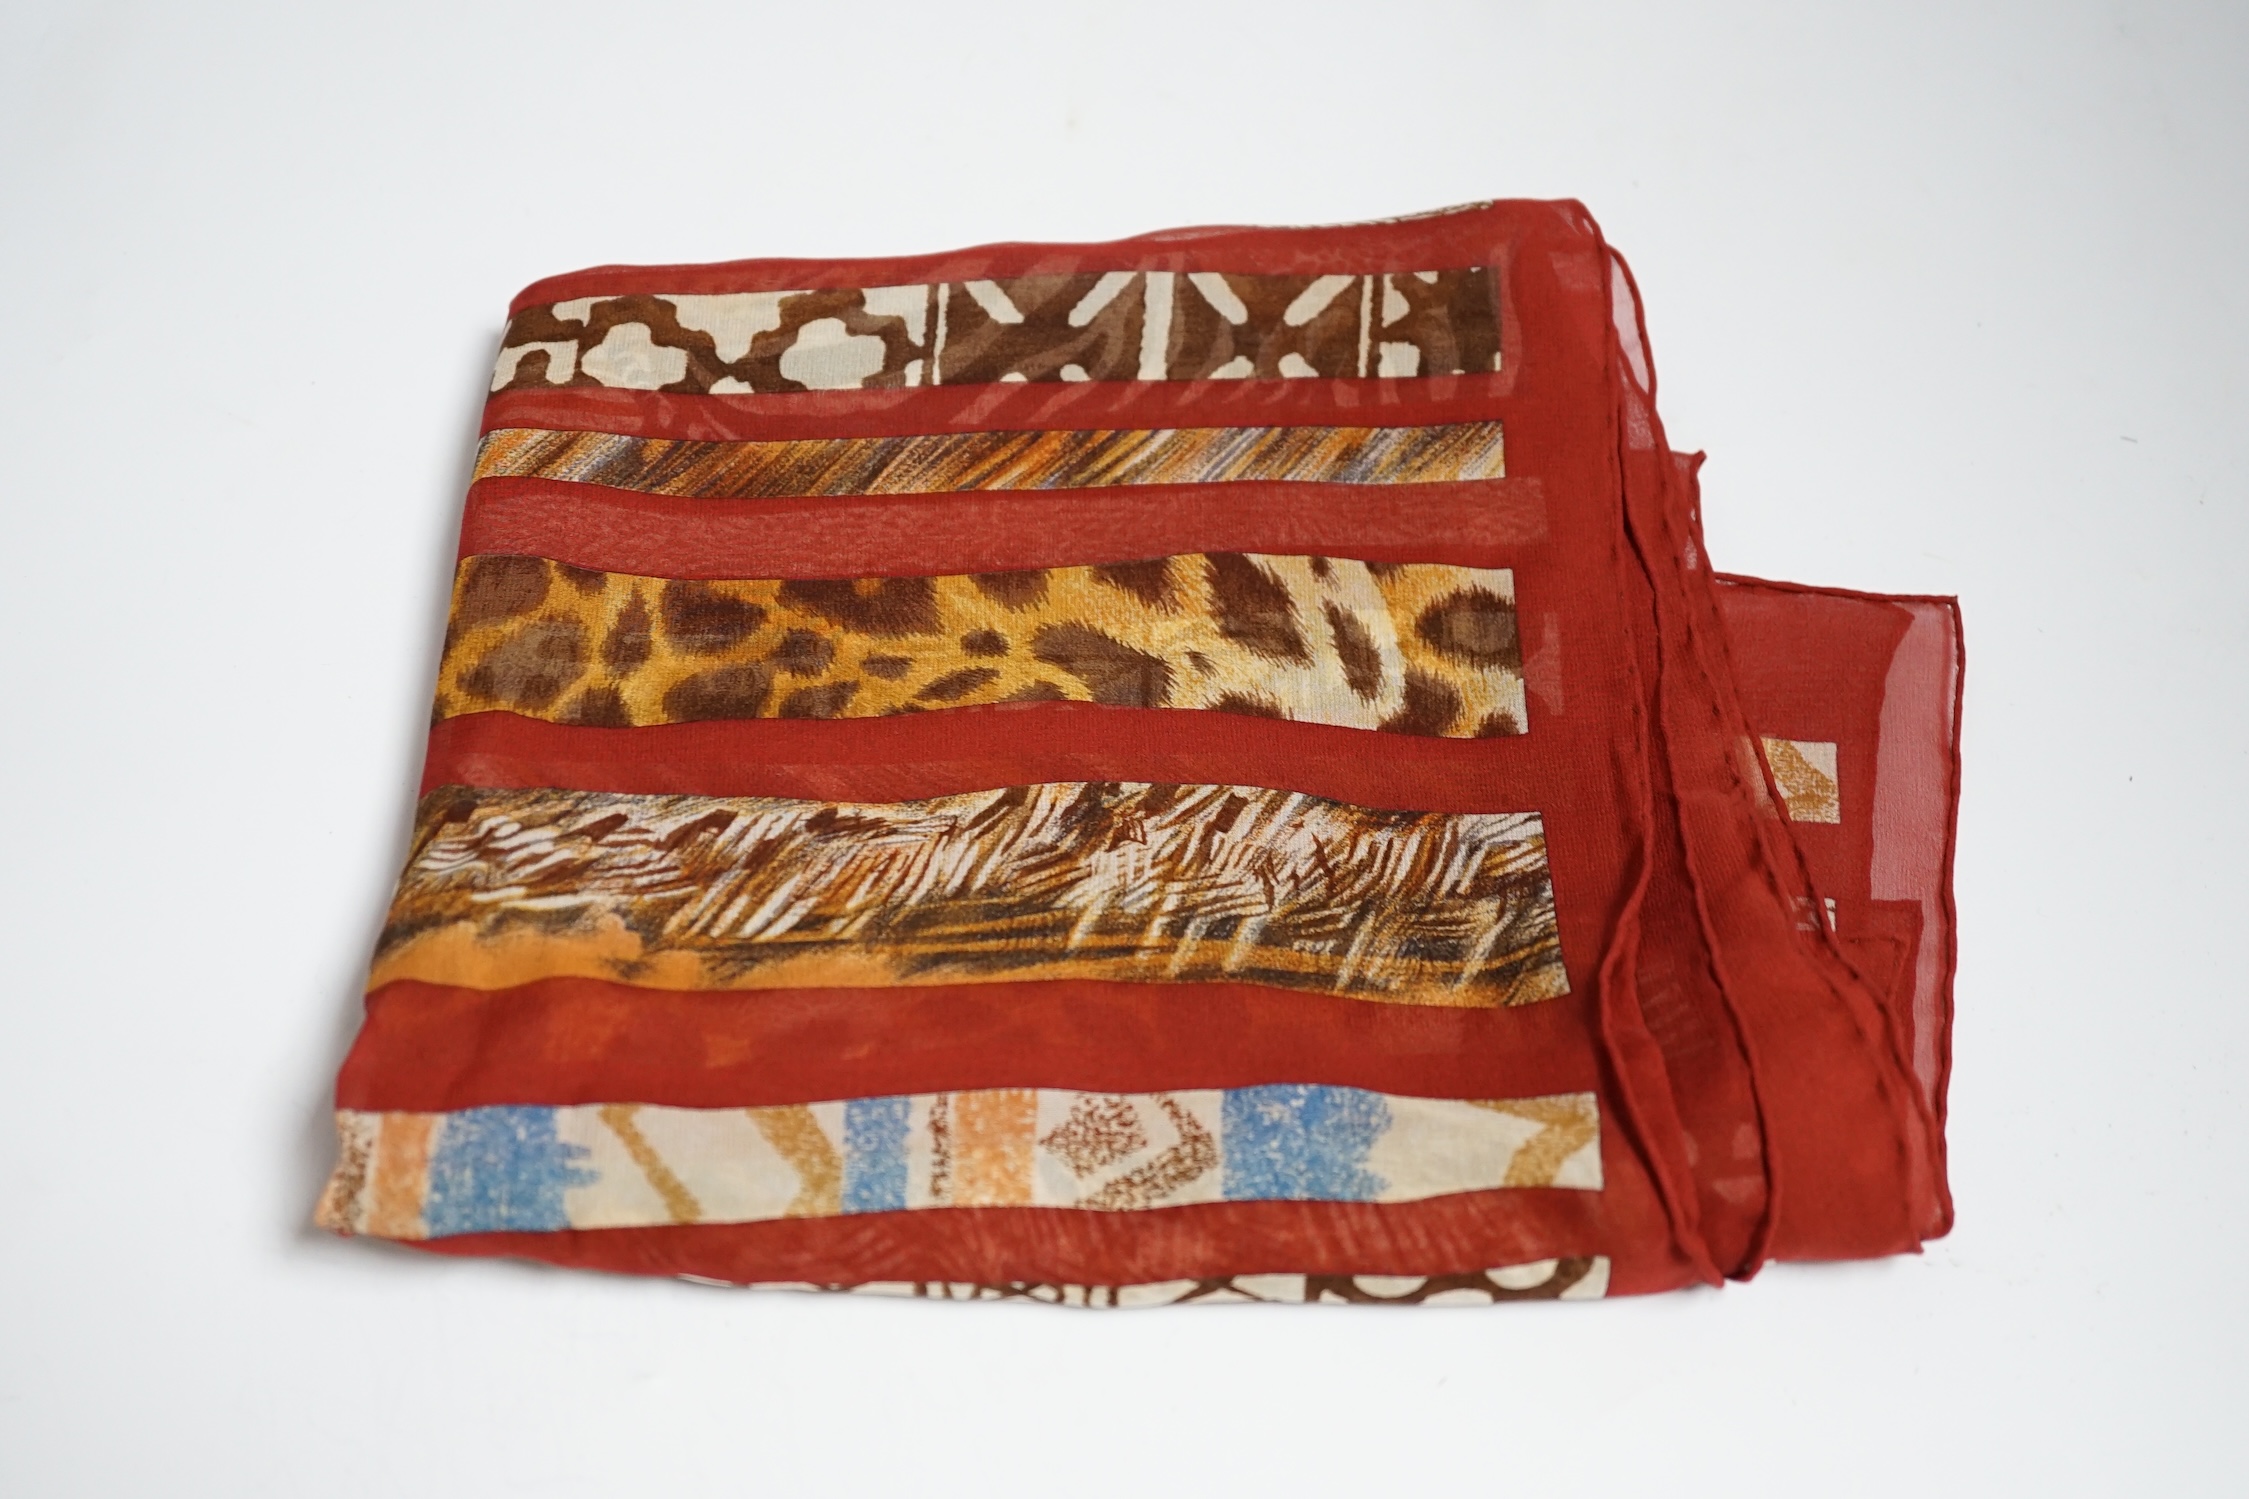 A Salvatore Ferragamo silk scarf "Leopard Jungle", print in box - Image 3 of 3